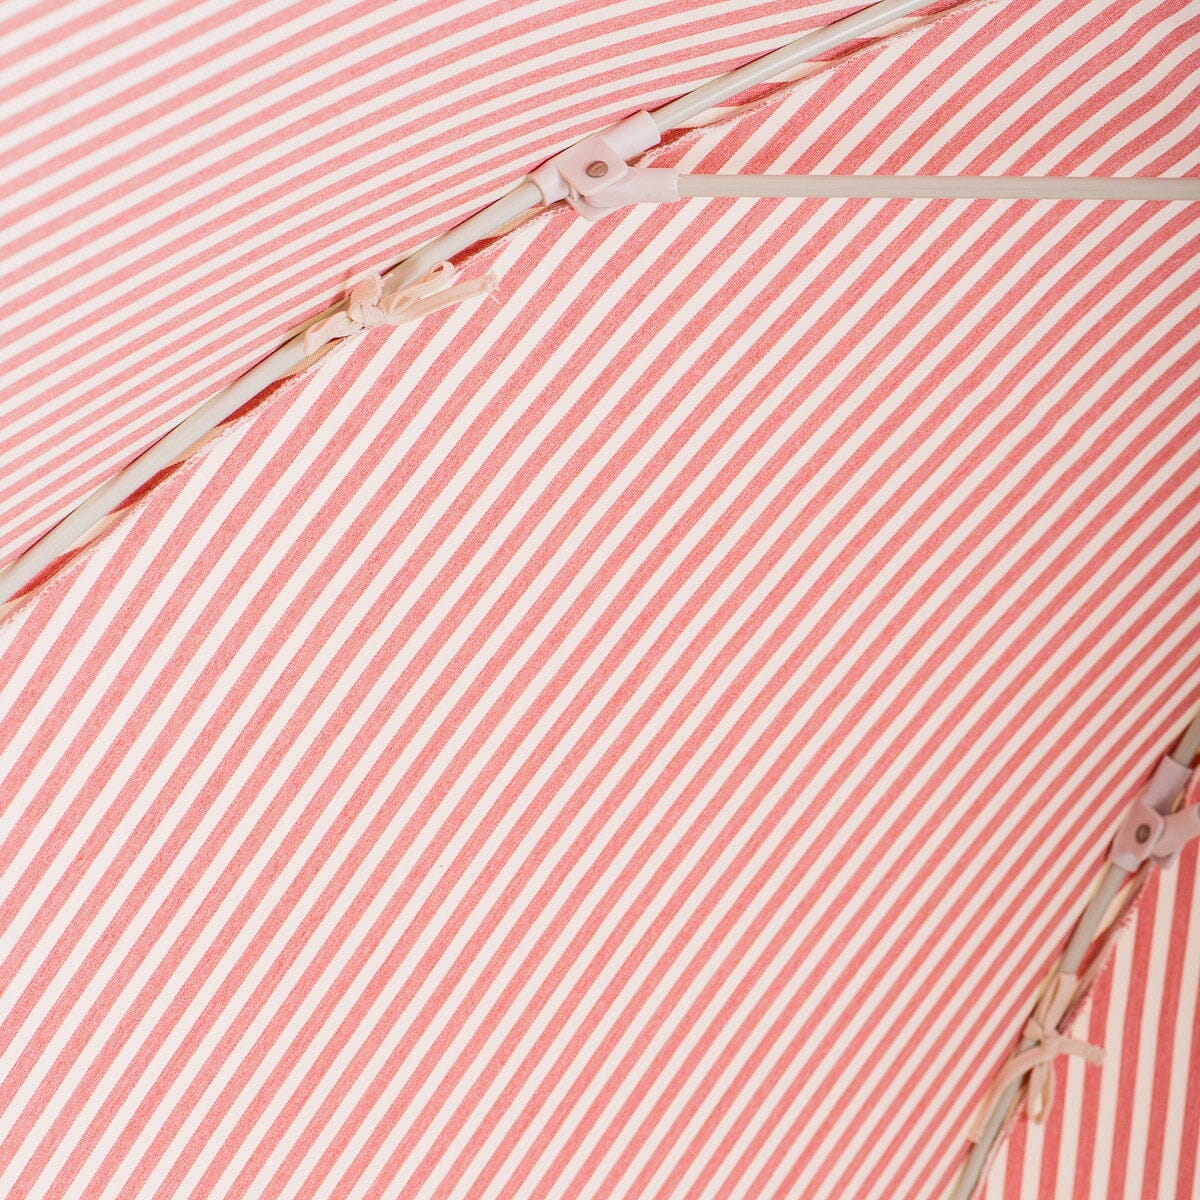 close up of canopy ties on pink stripe patio umbrella